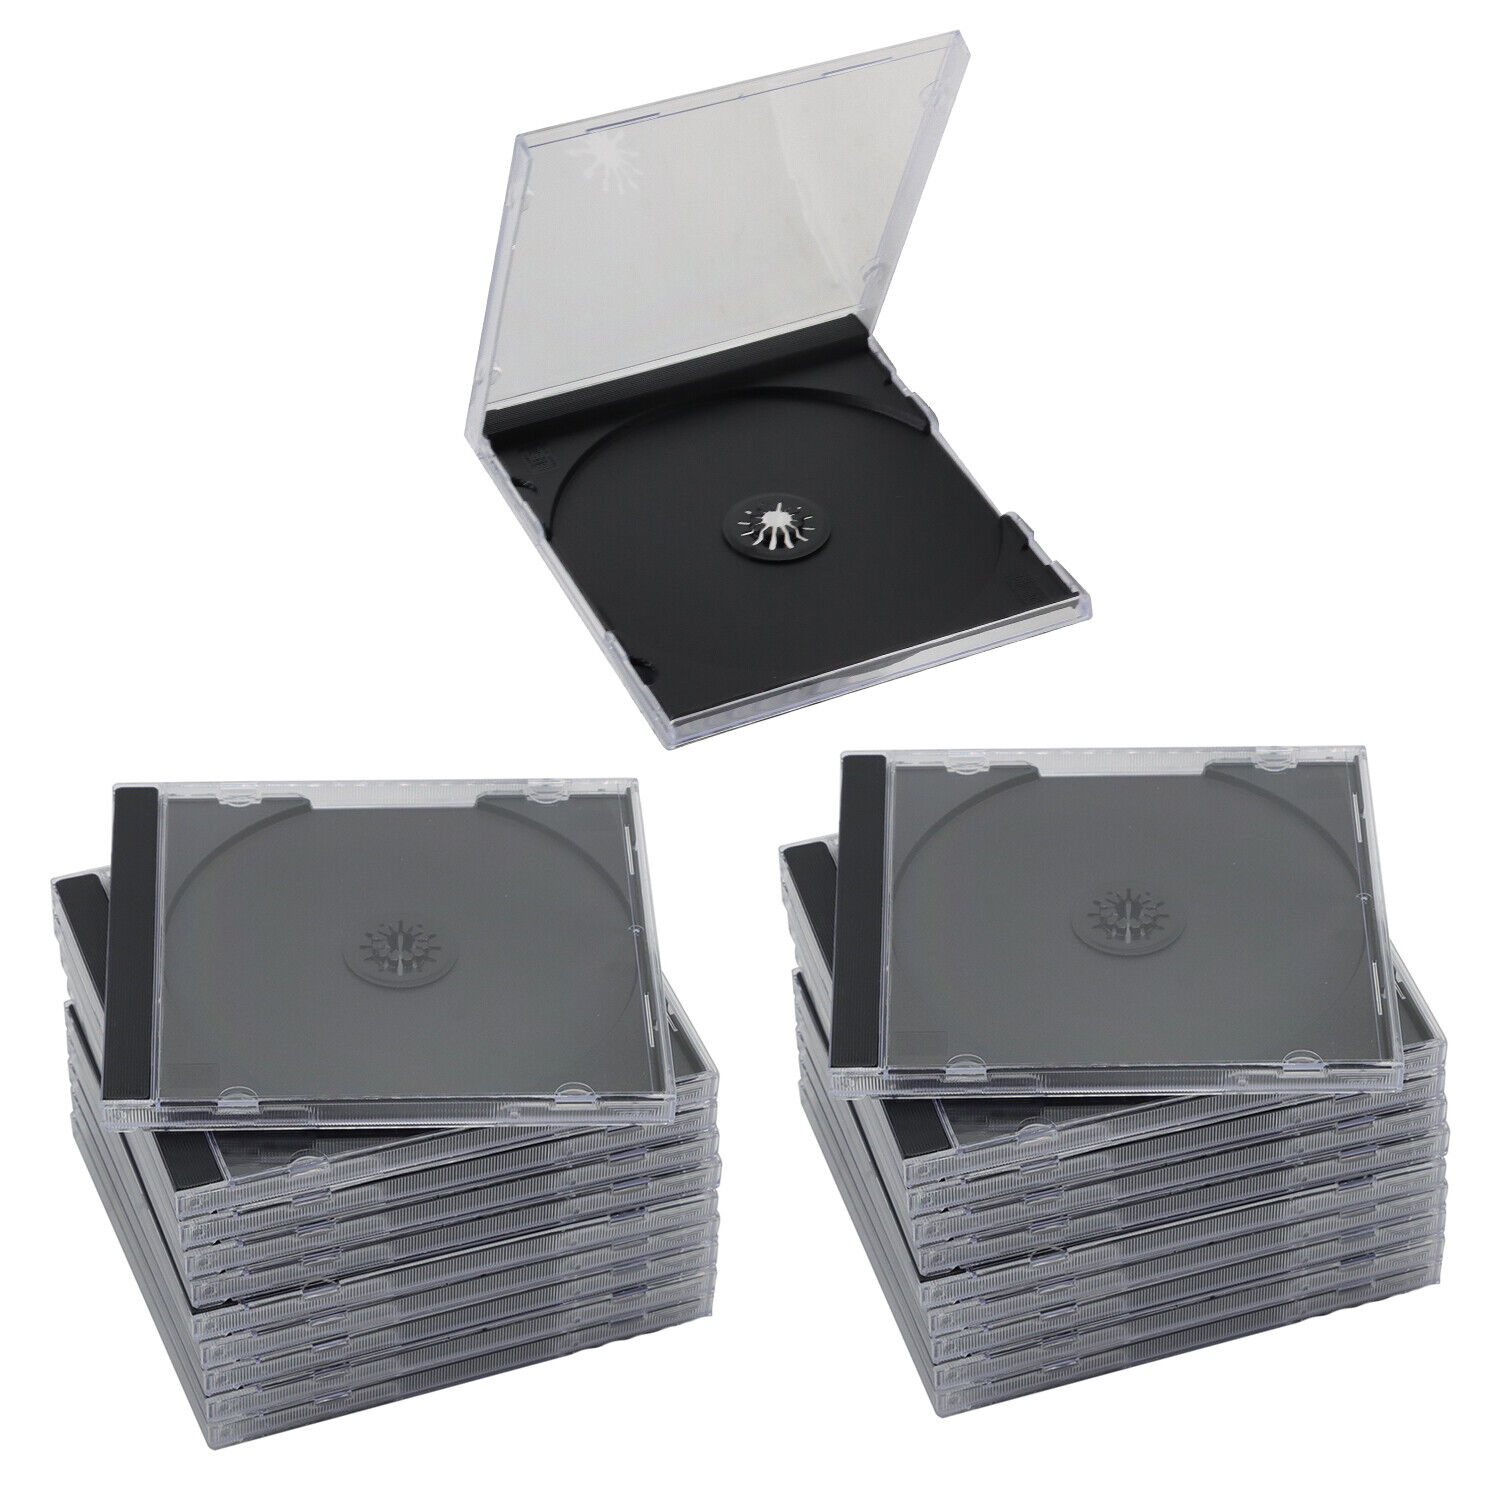 20x Single Disc STANDARD CD Jewel Case Lots Black transparent packing Box